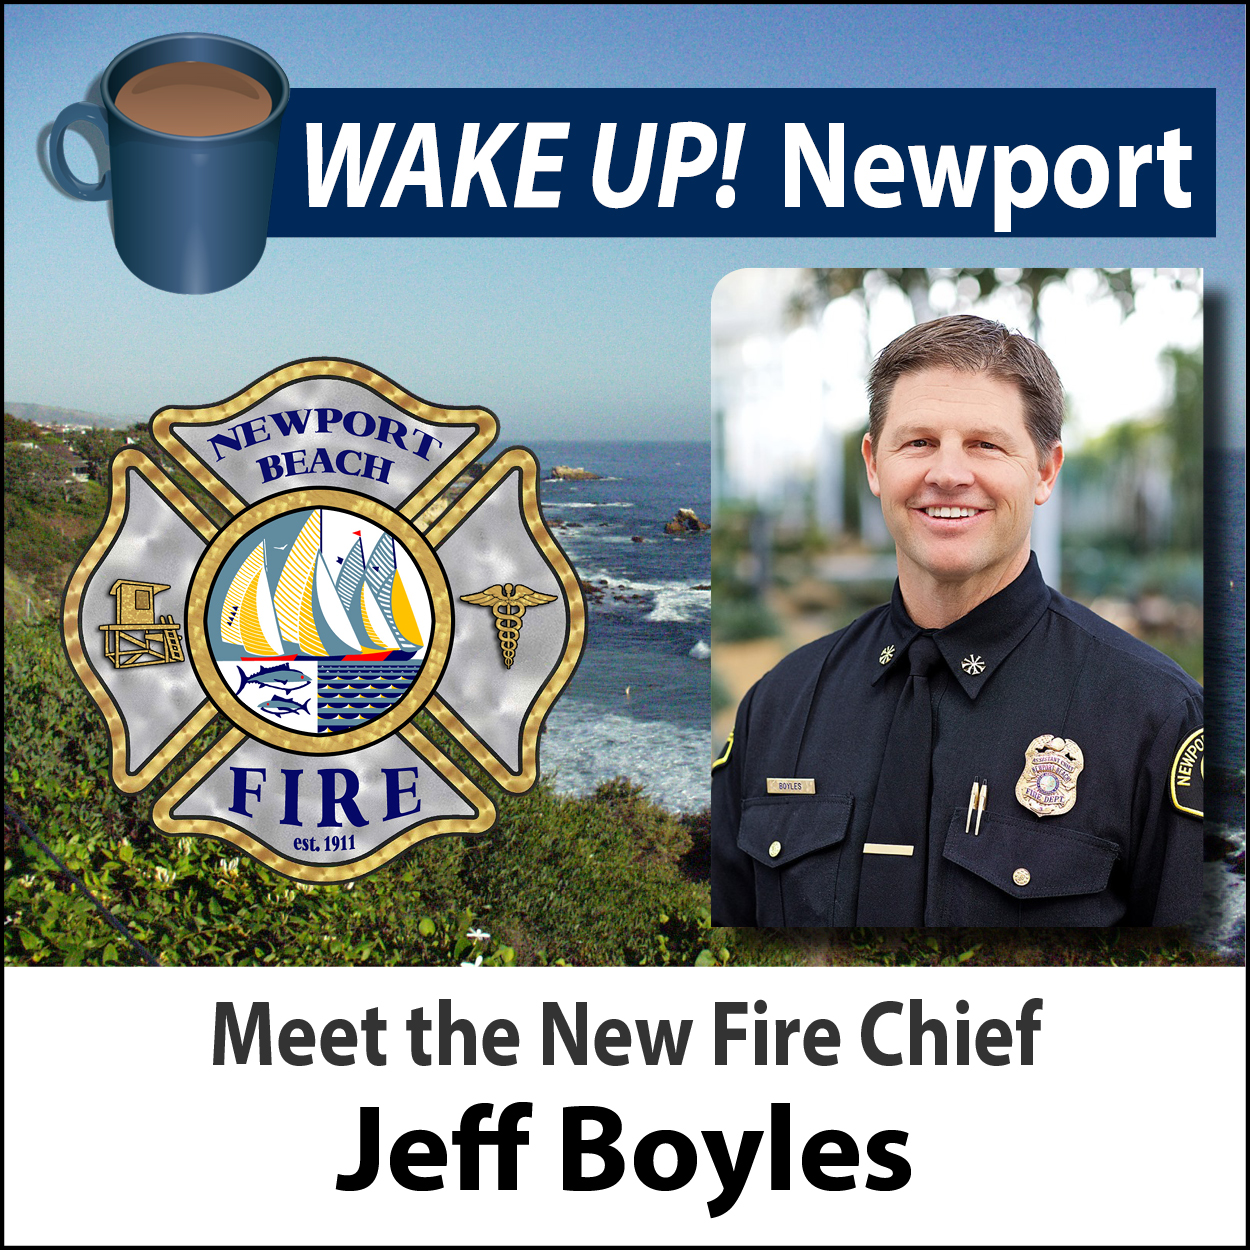 September WAKE UP! Newport - Meet the New Fire Chief Jeff Boyles